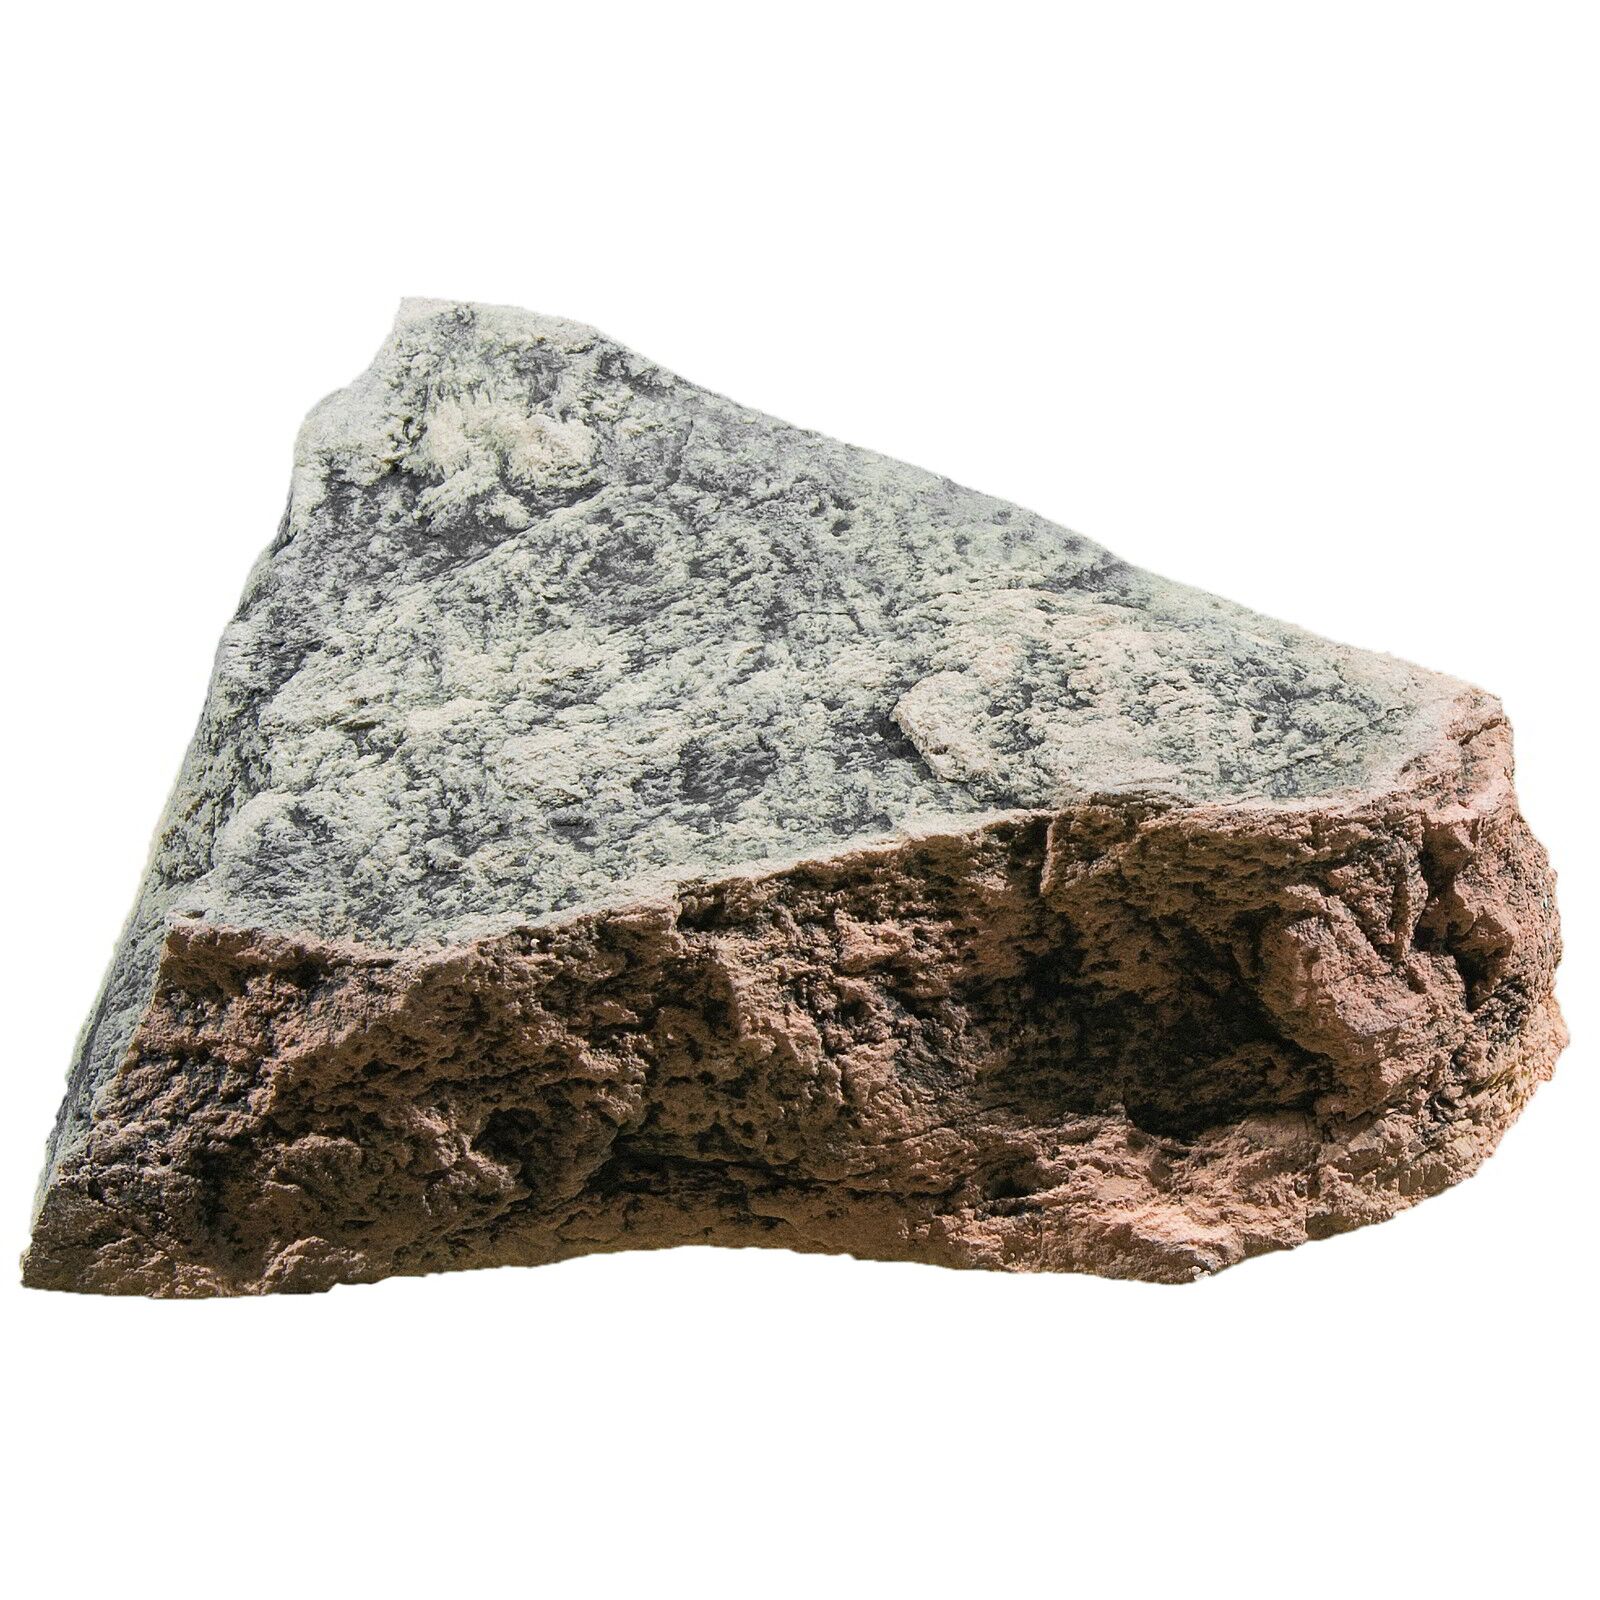 Back to Nature - Aquarium Modul Basalt/Gneiss